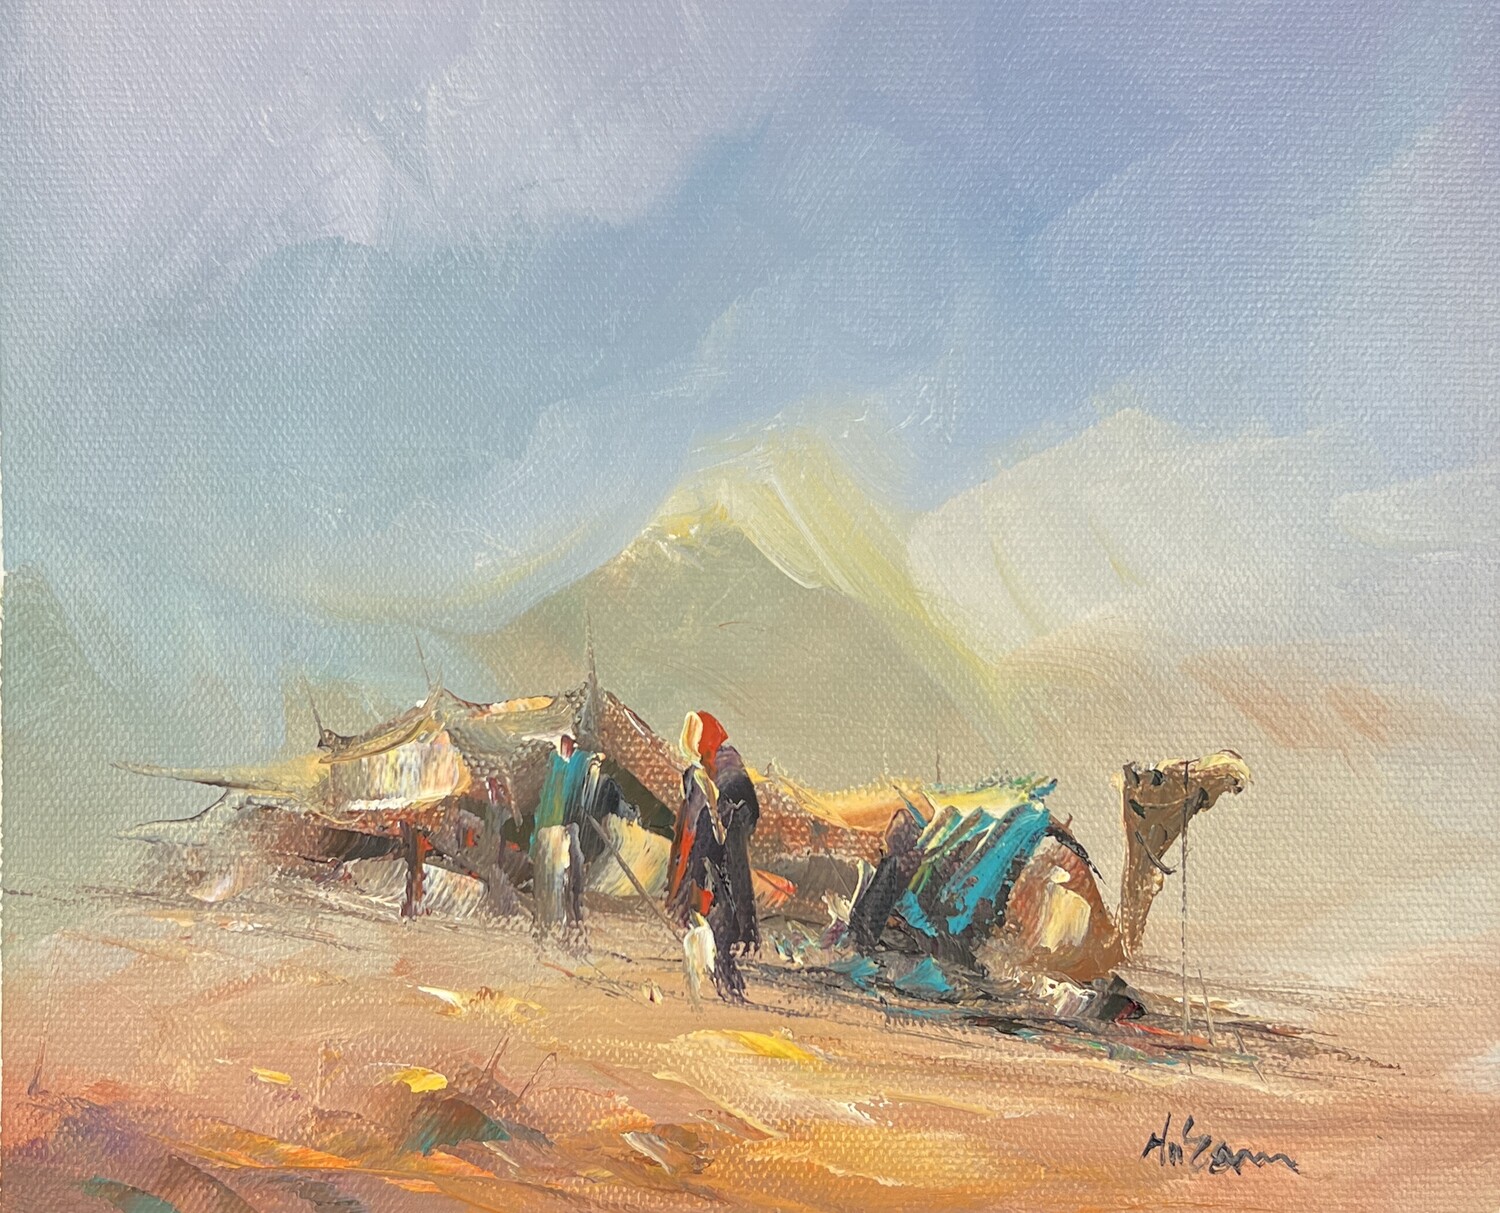 Bedouin Tent & Camel - Knife Art Oil Painting